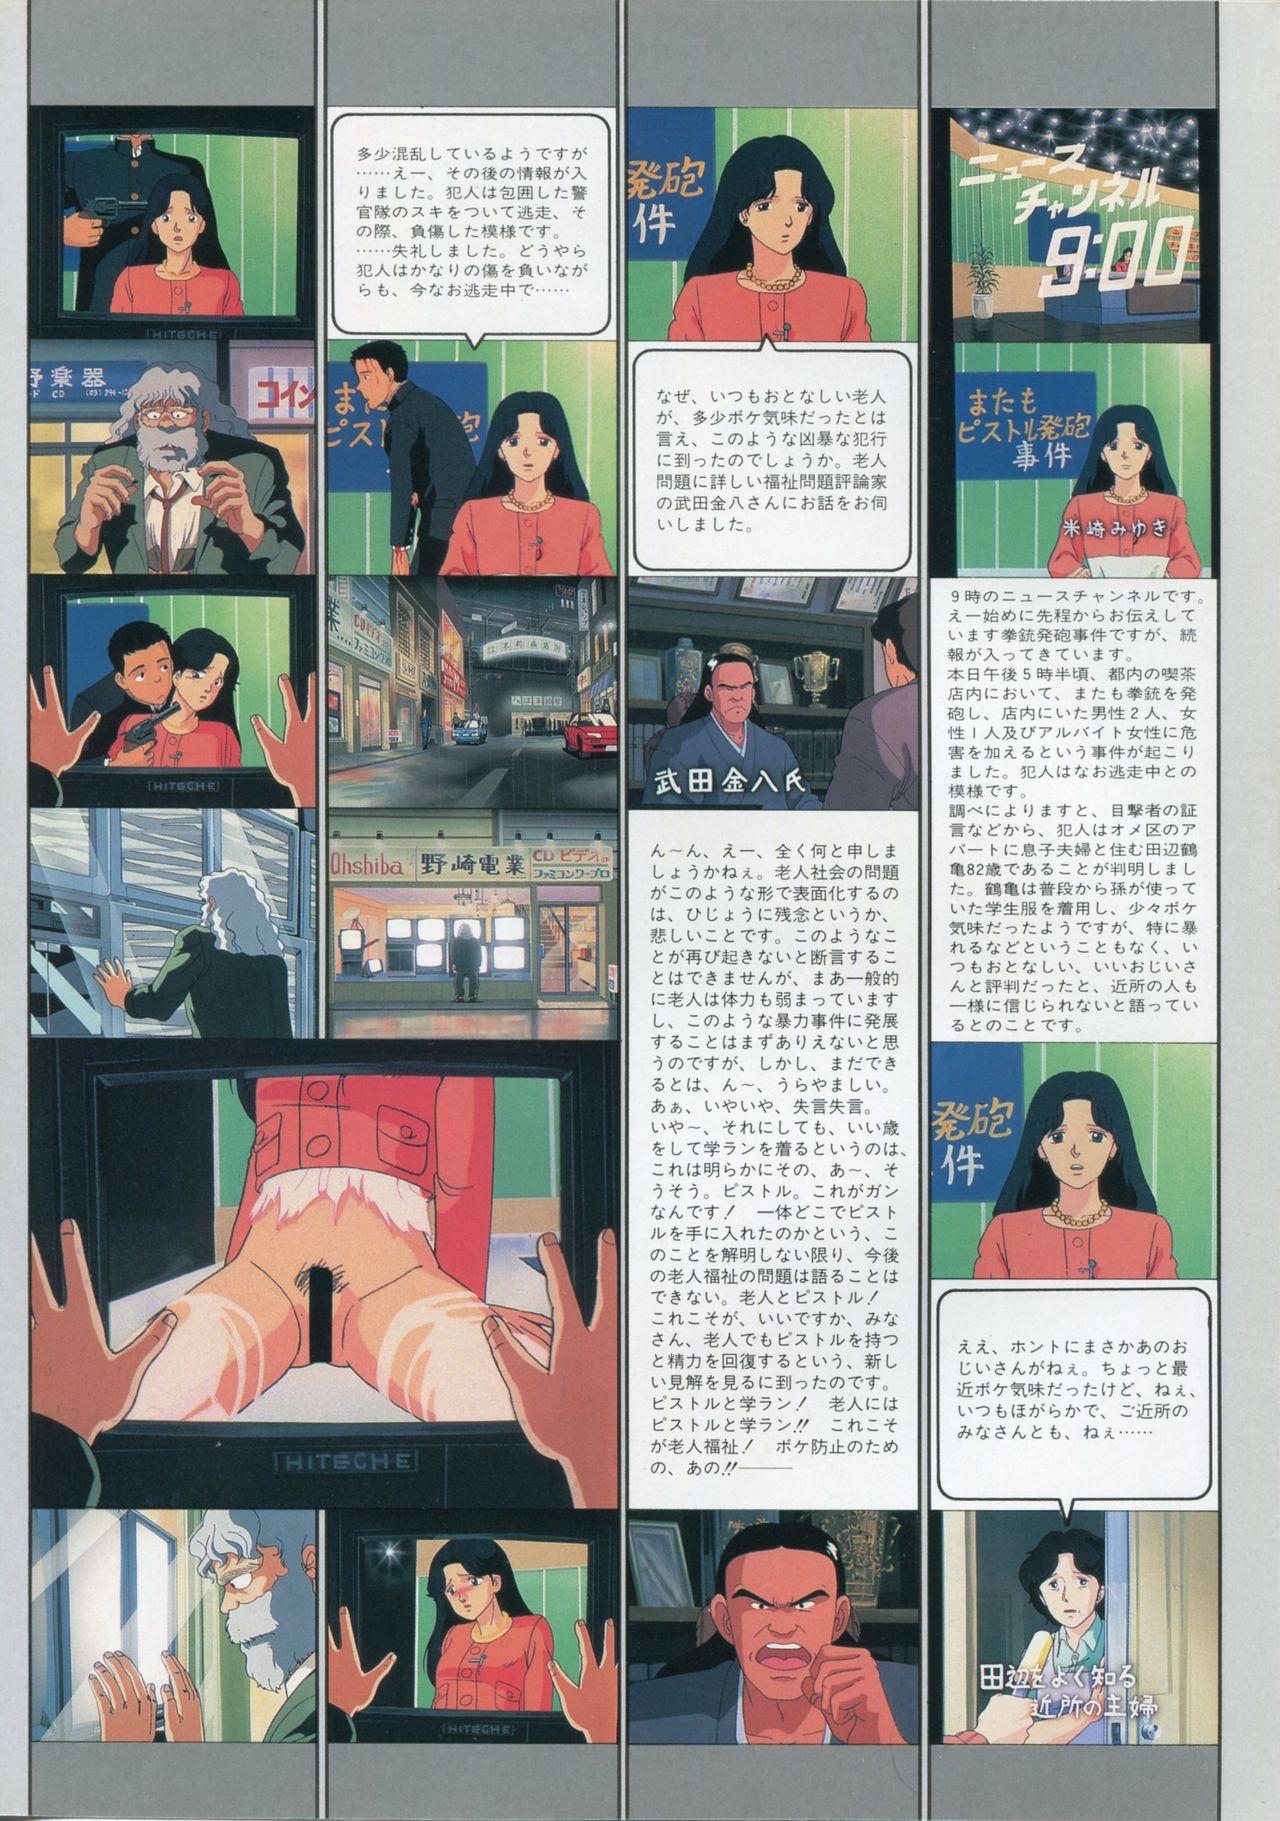 Bishoujo Anime Daizenshuu - Adult Animation Video Catalog 1991 33